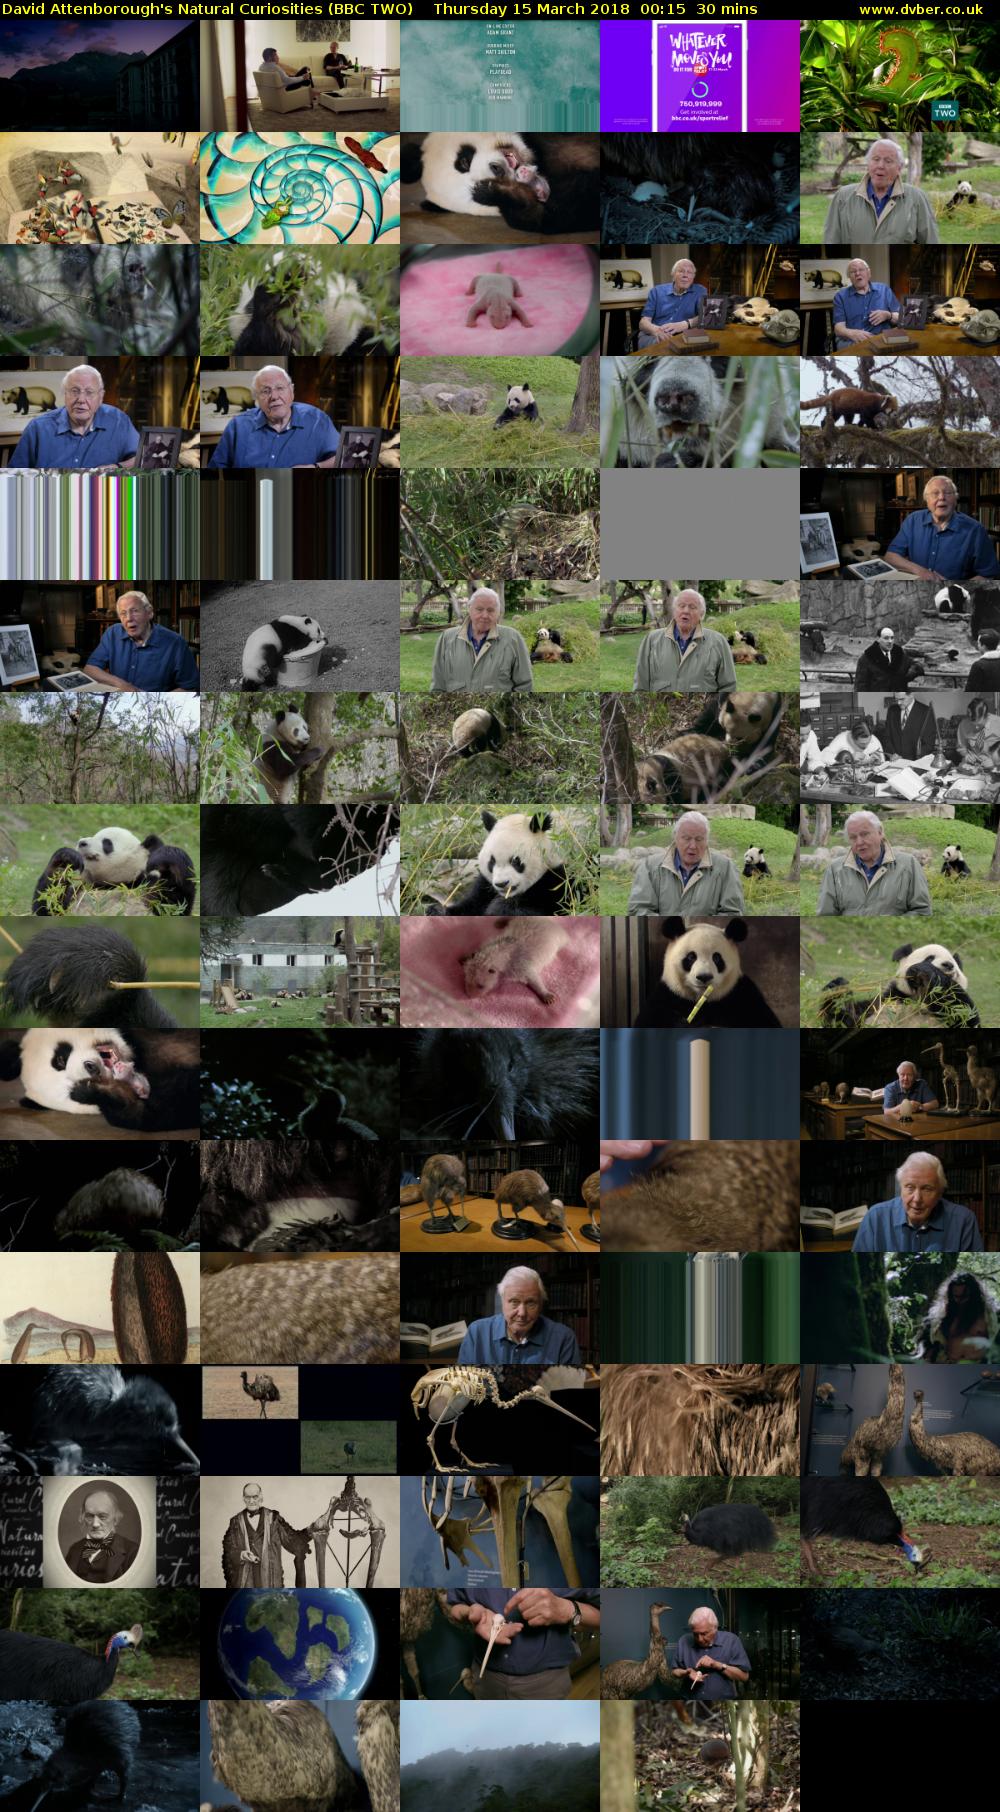 David Attenborough's Natural Curiosities (BBC TWO) Thursday 15 March 2018 00:15 - 00:45